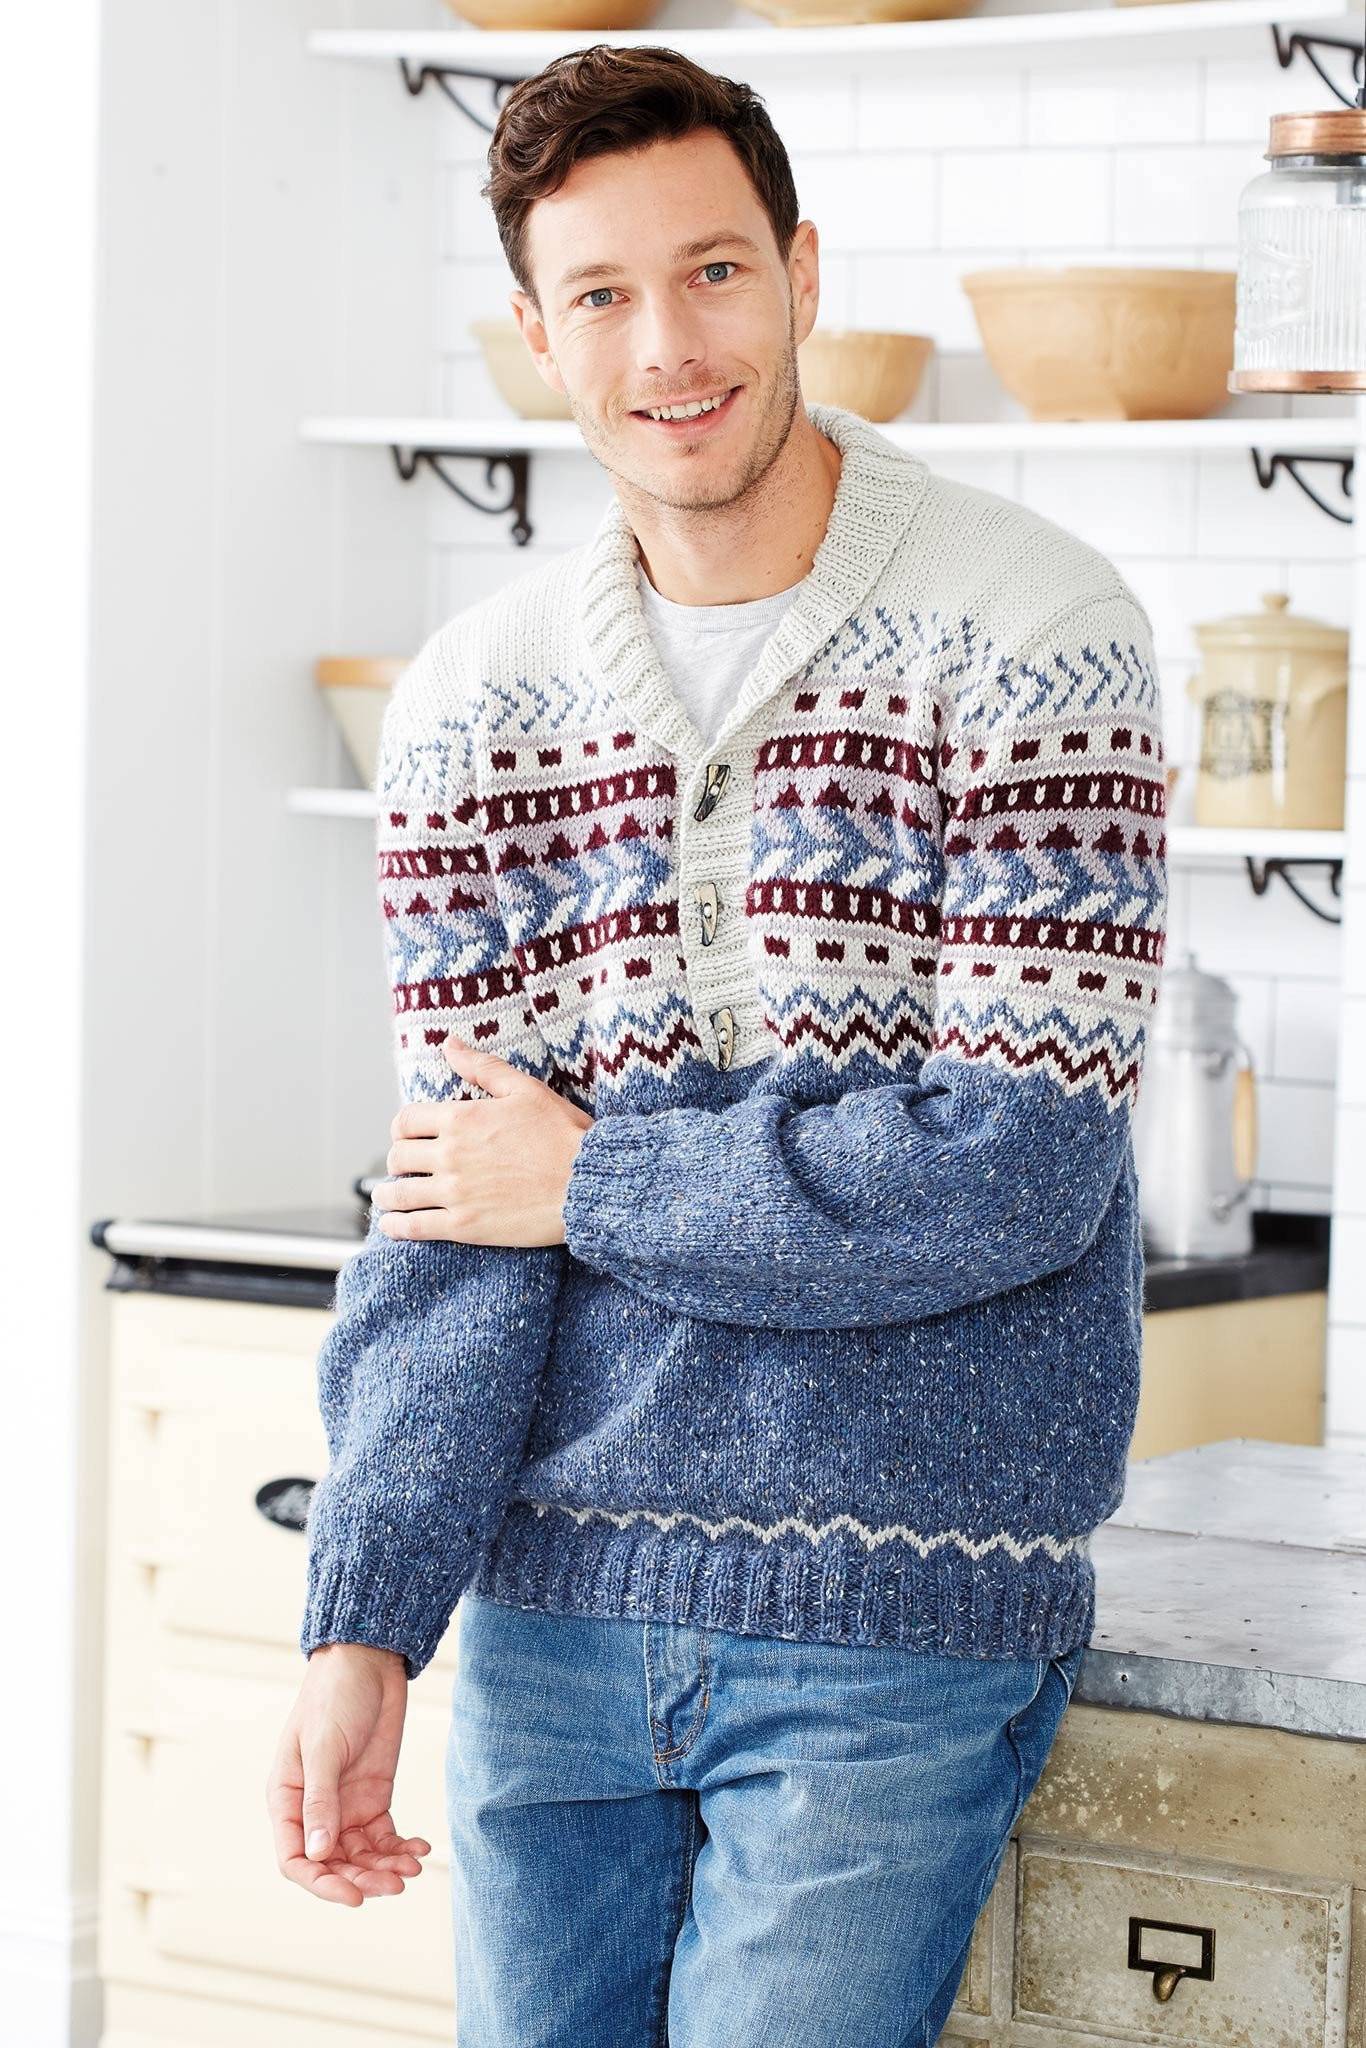 Mens Tweed Fair Isle Sweater Knitting Pattern | The ...